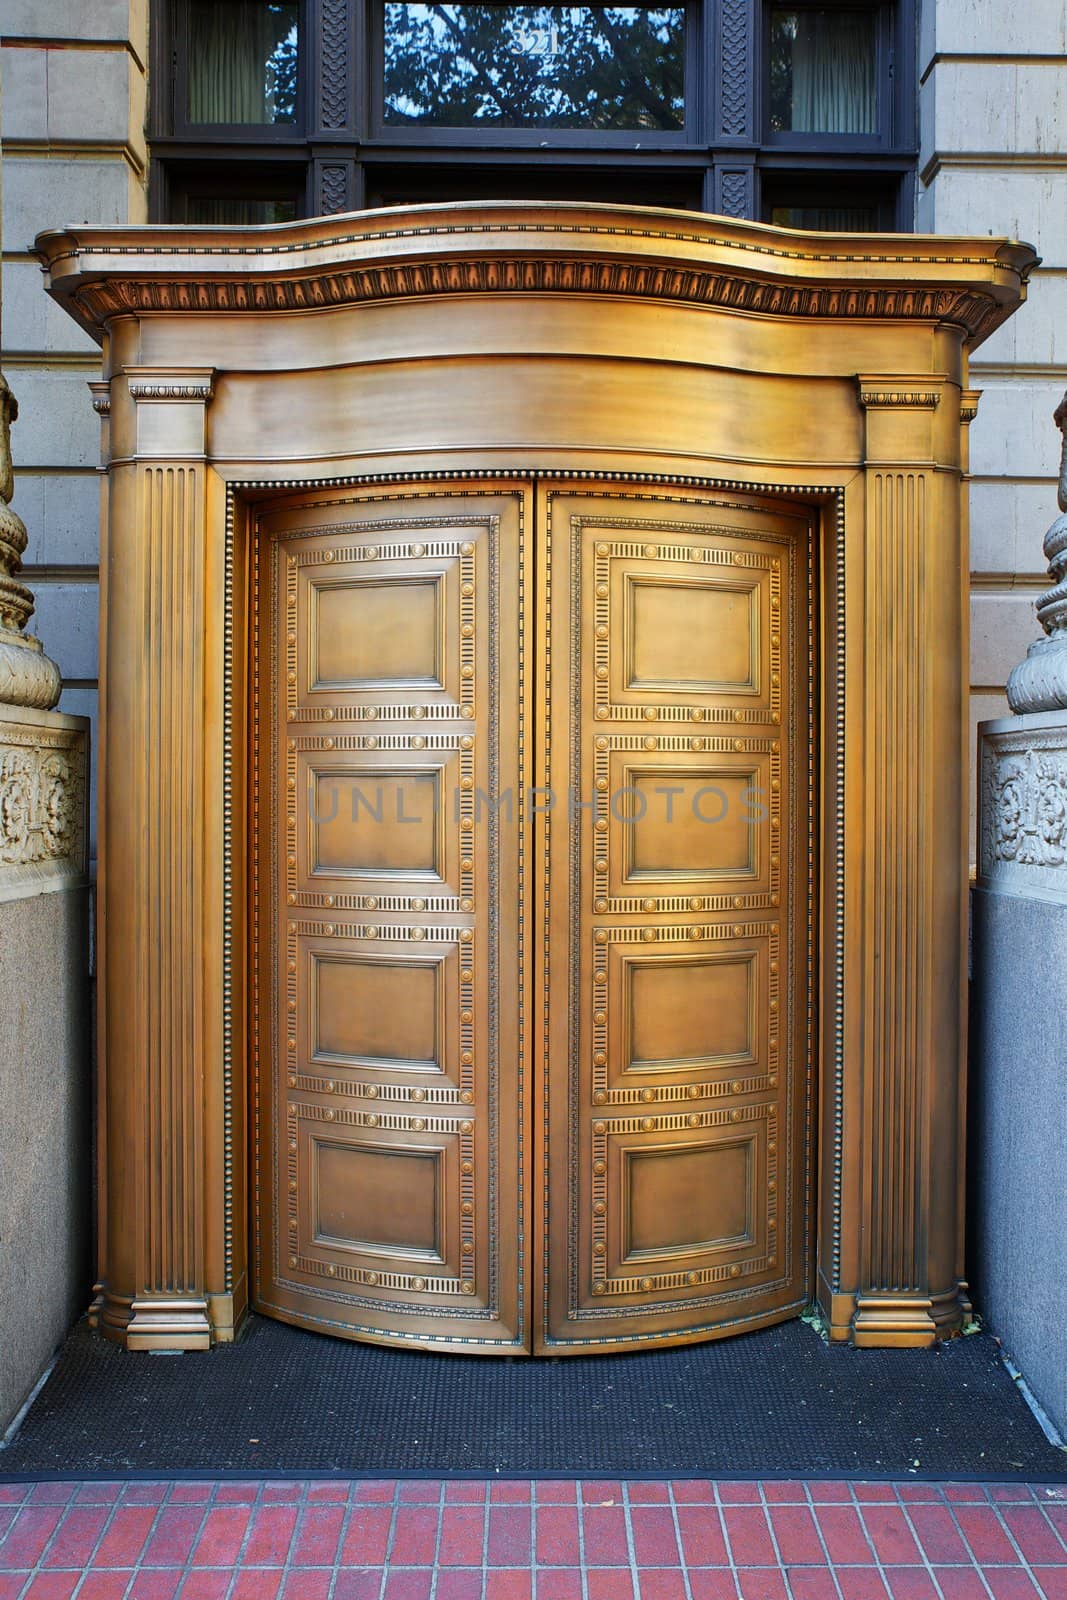 Big Brass Revolving Bank Doors by bobkeenan